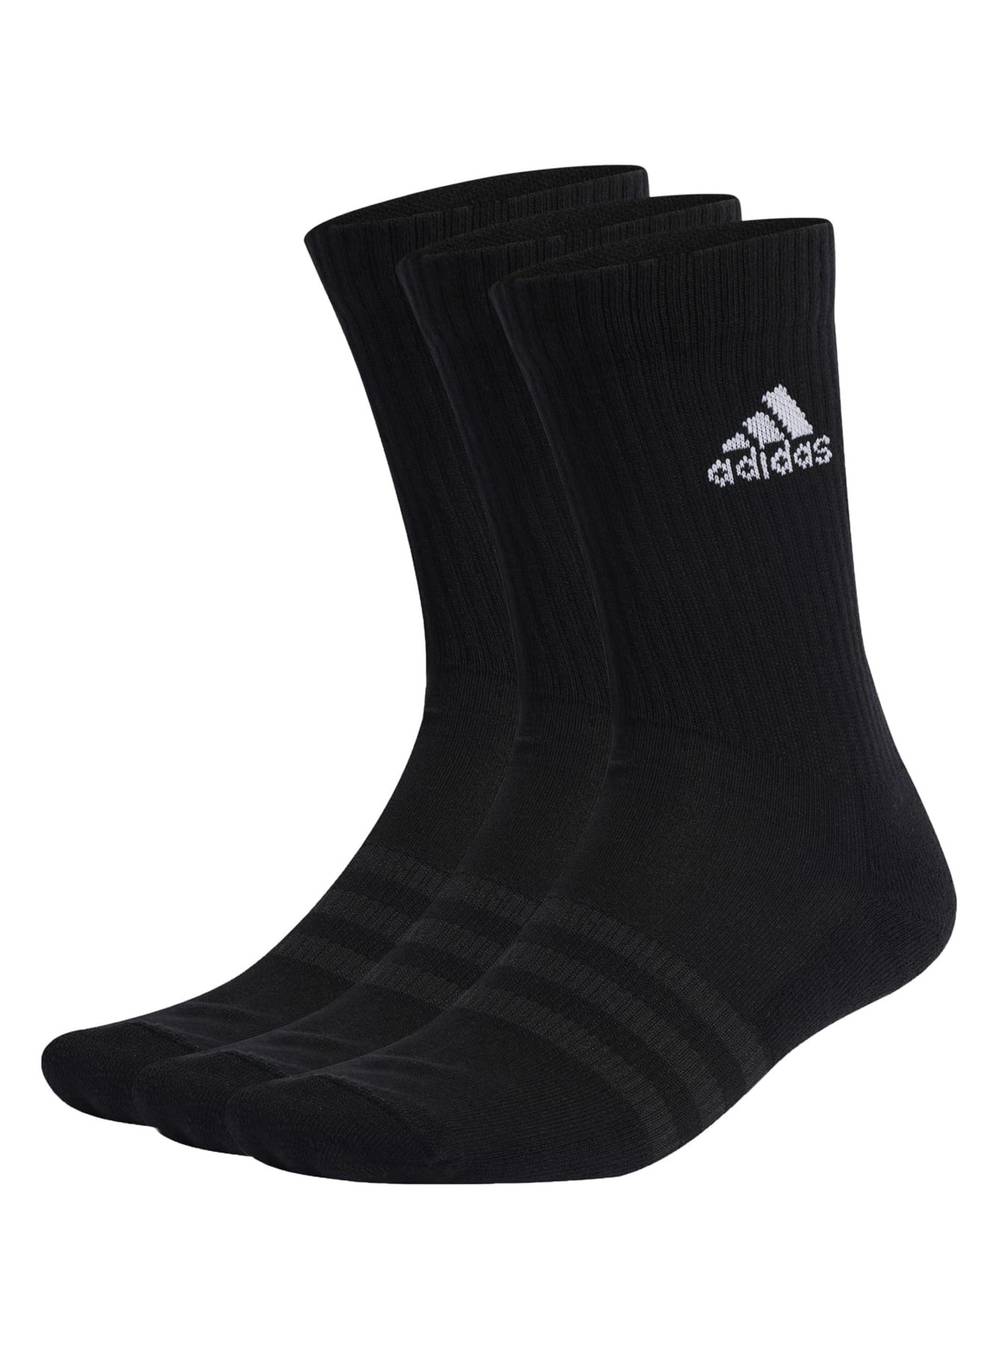 Adidas pack 3 calcetín design urbana (color: negro. talla: m)